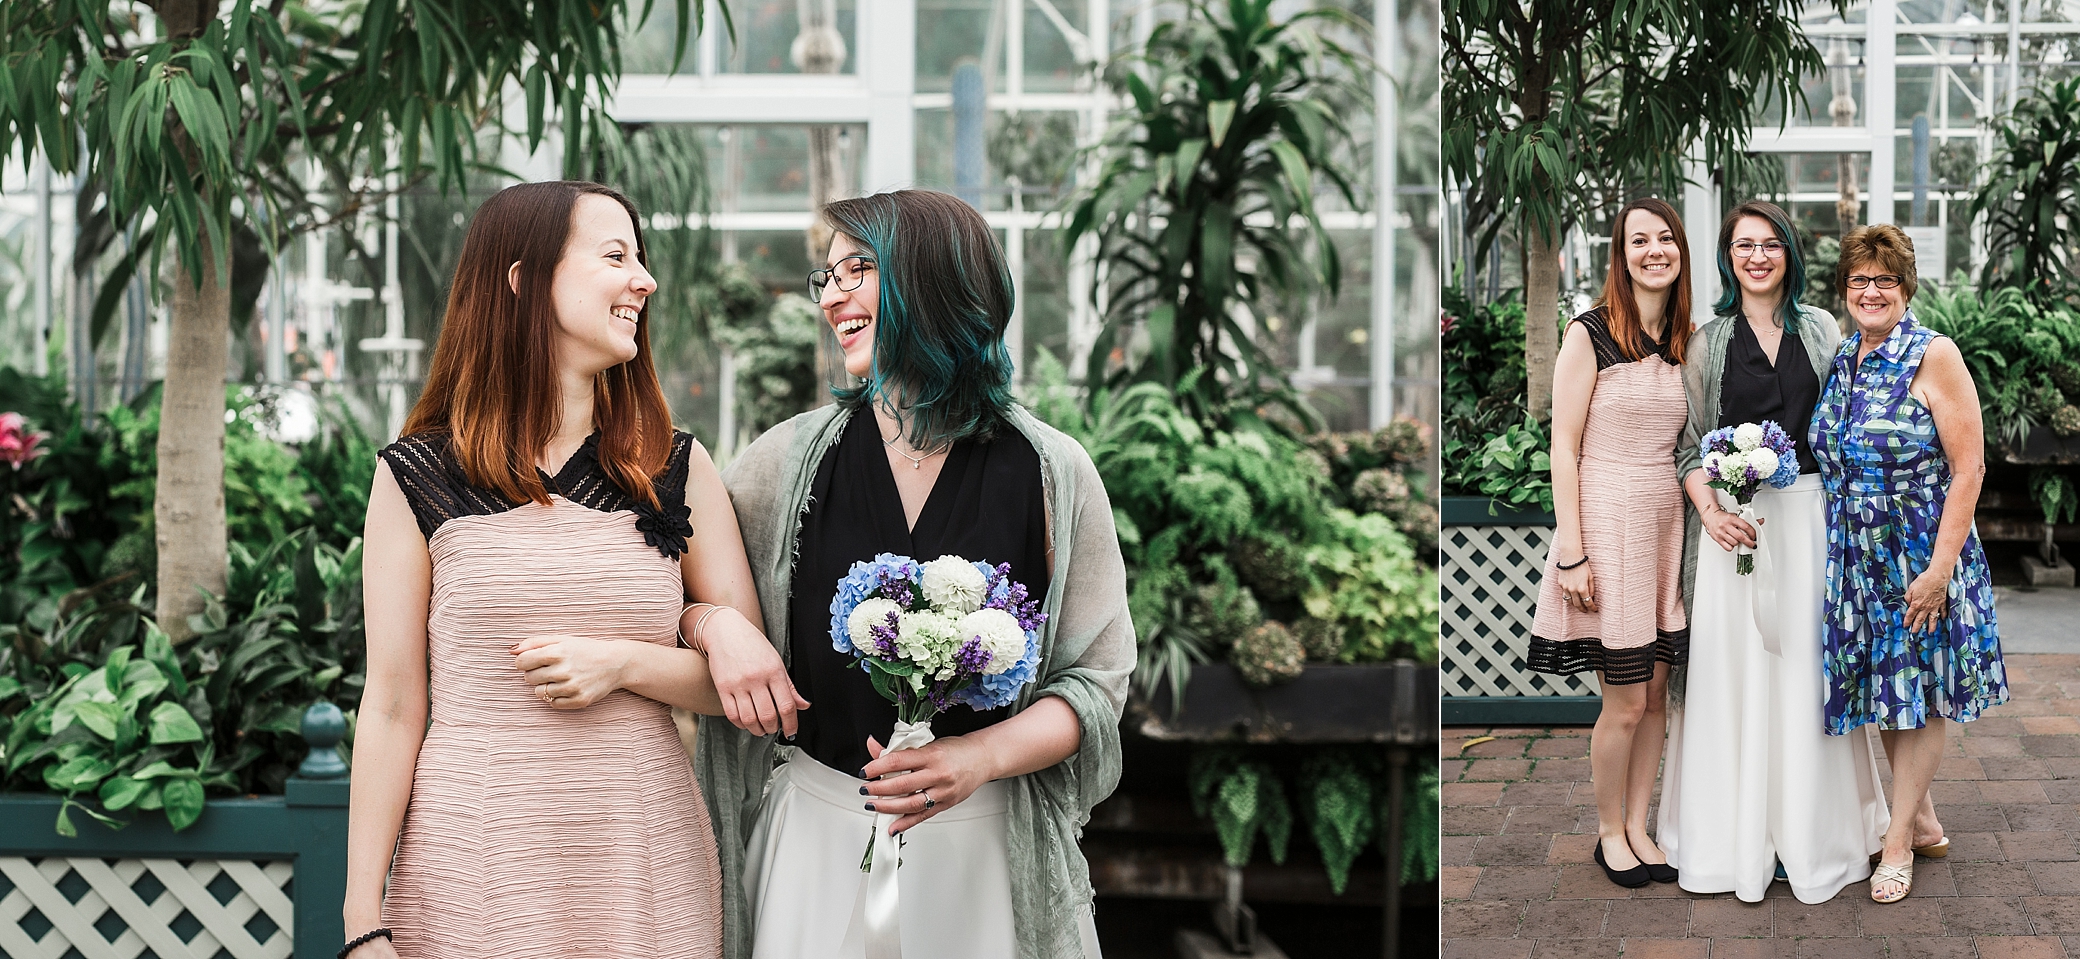 Volunteer-Park-Conservatory-Seattle-Intimate-Wedding-Megan-Montalvo-Photography_0024.jpg